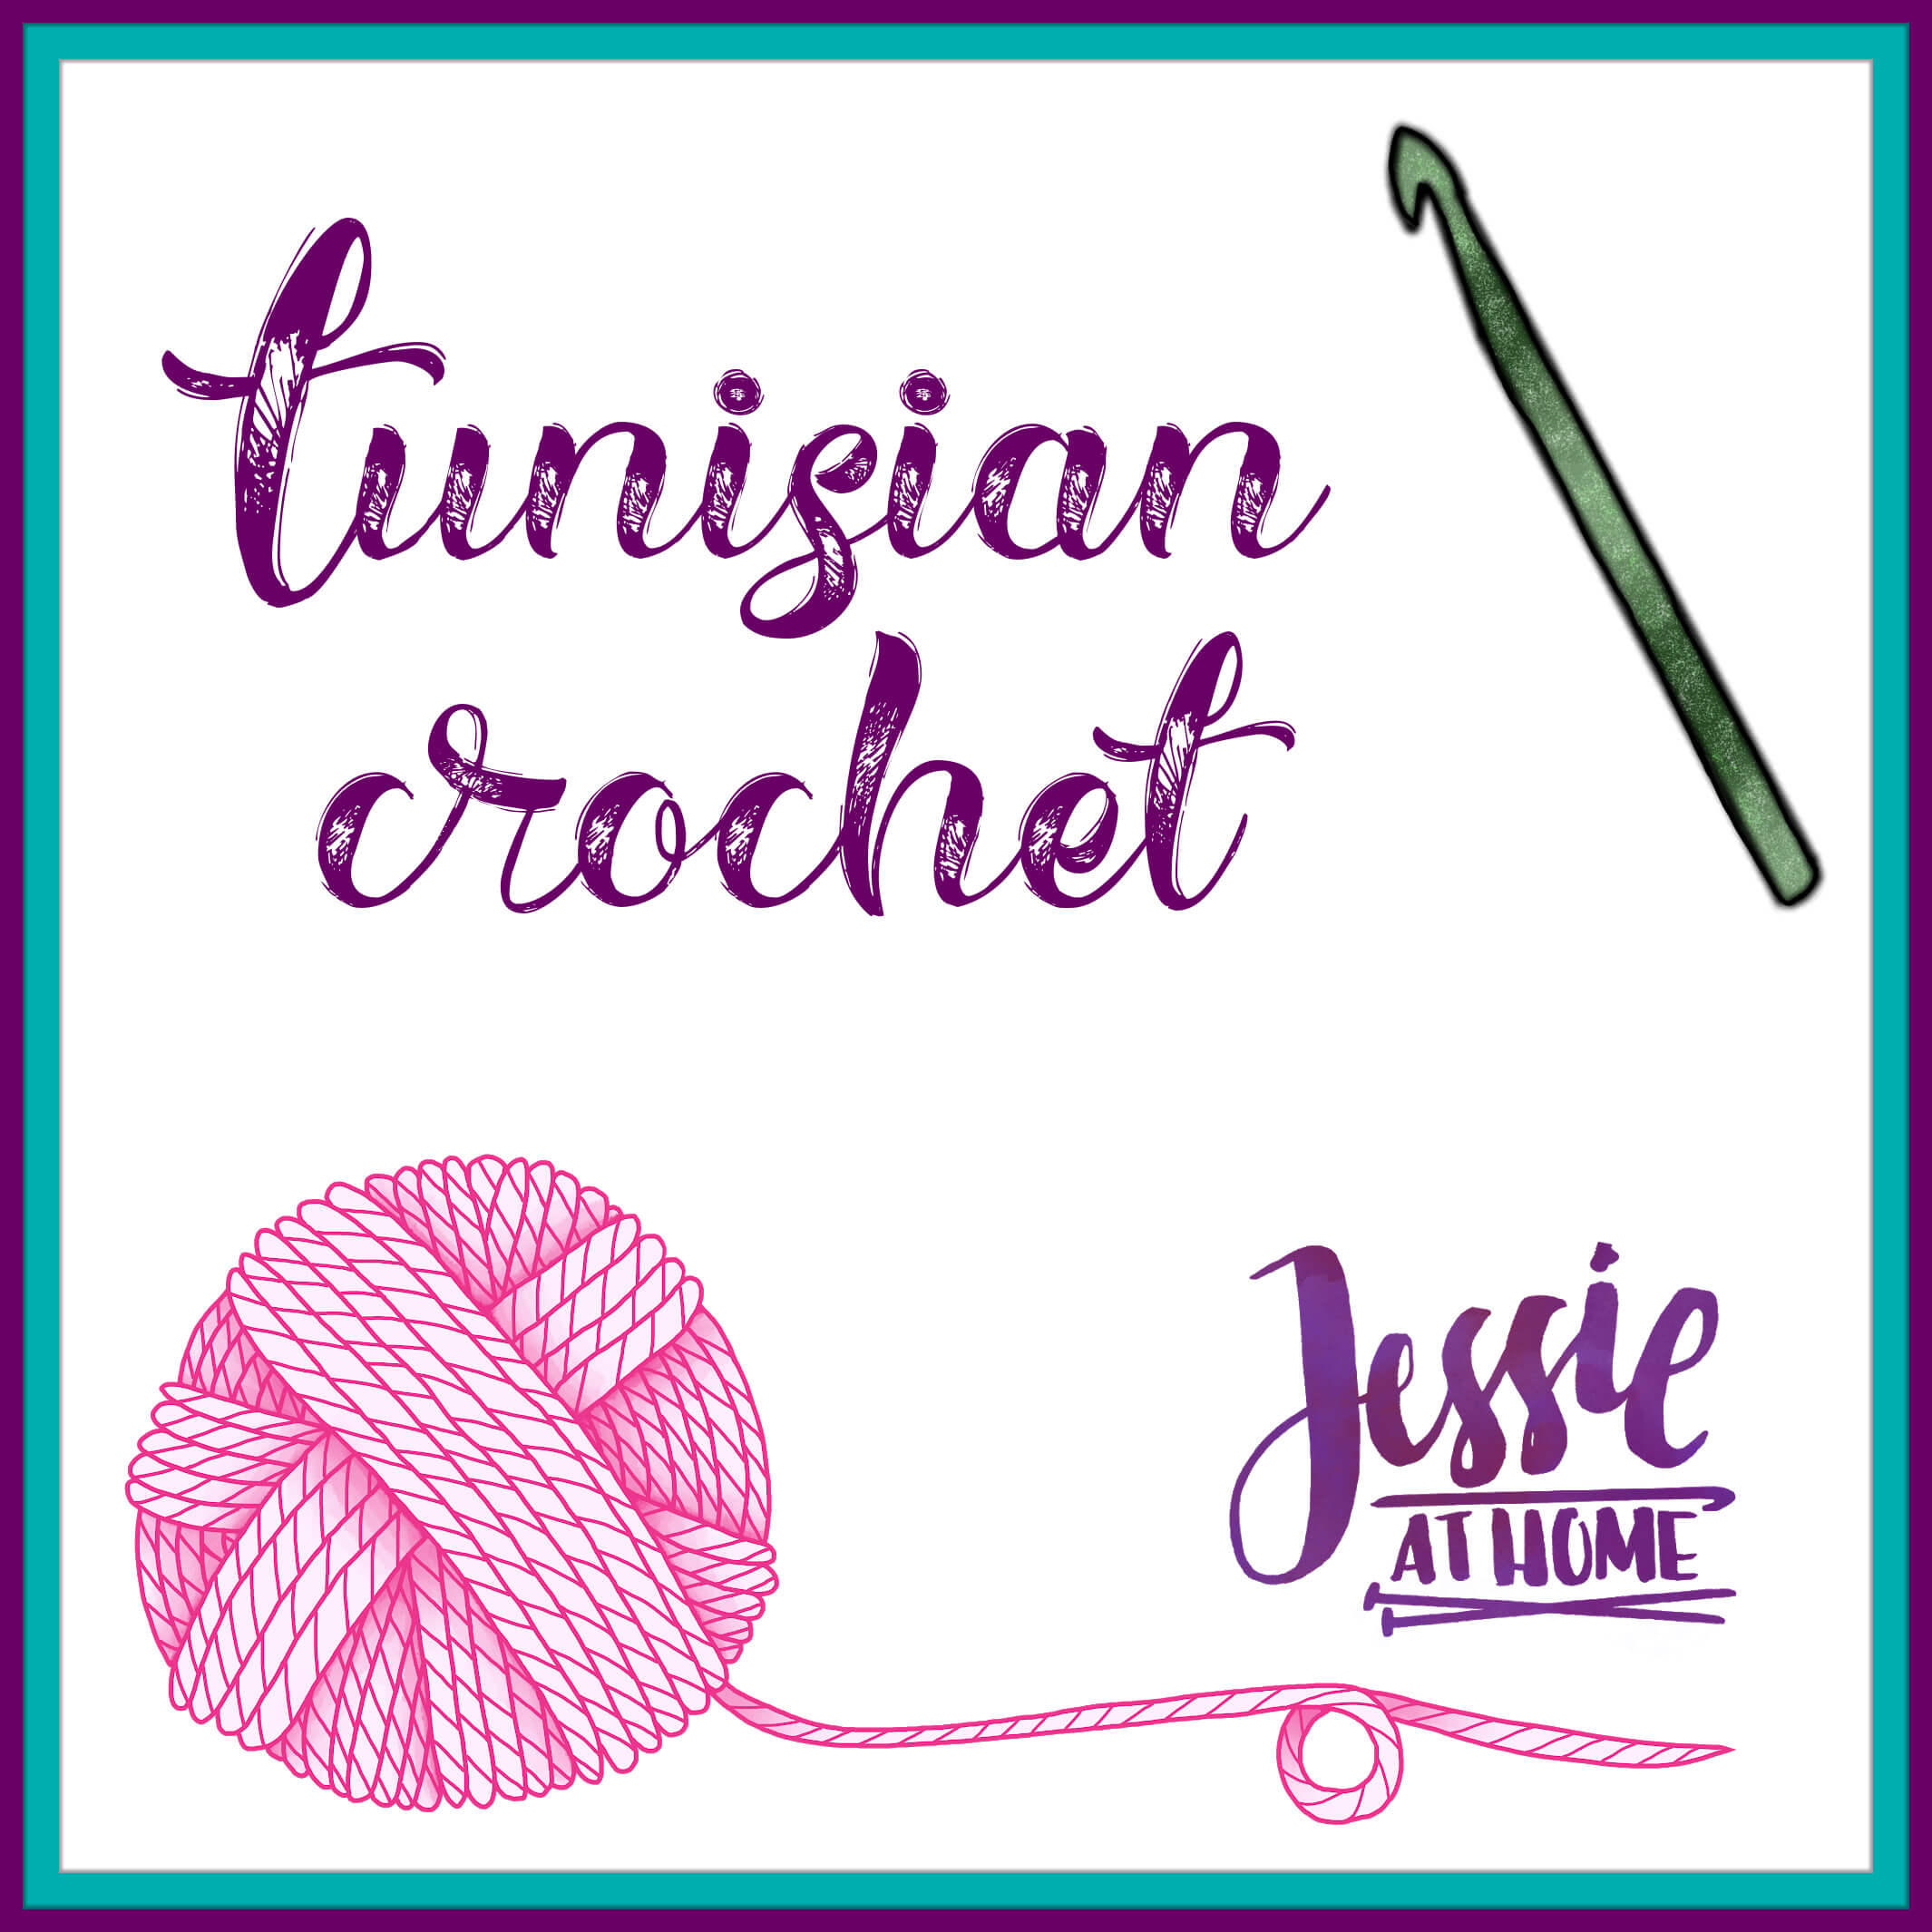 Tunisian Crochet Menu on Jessie At Home